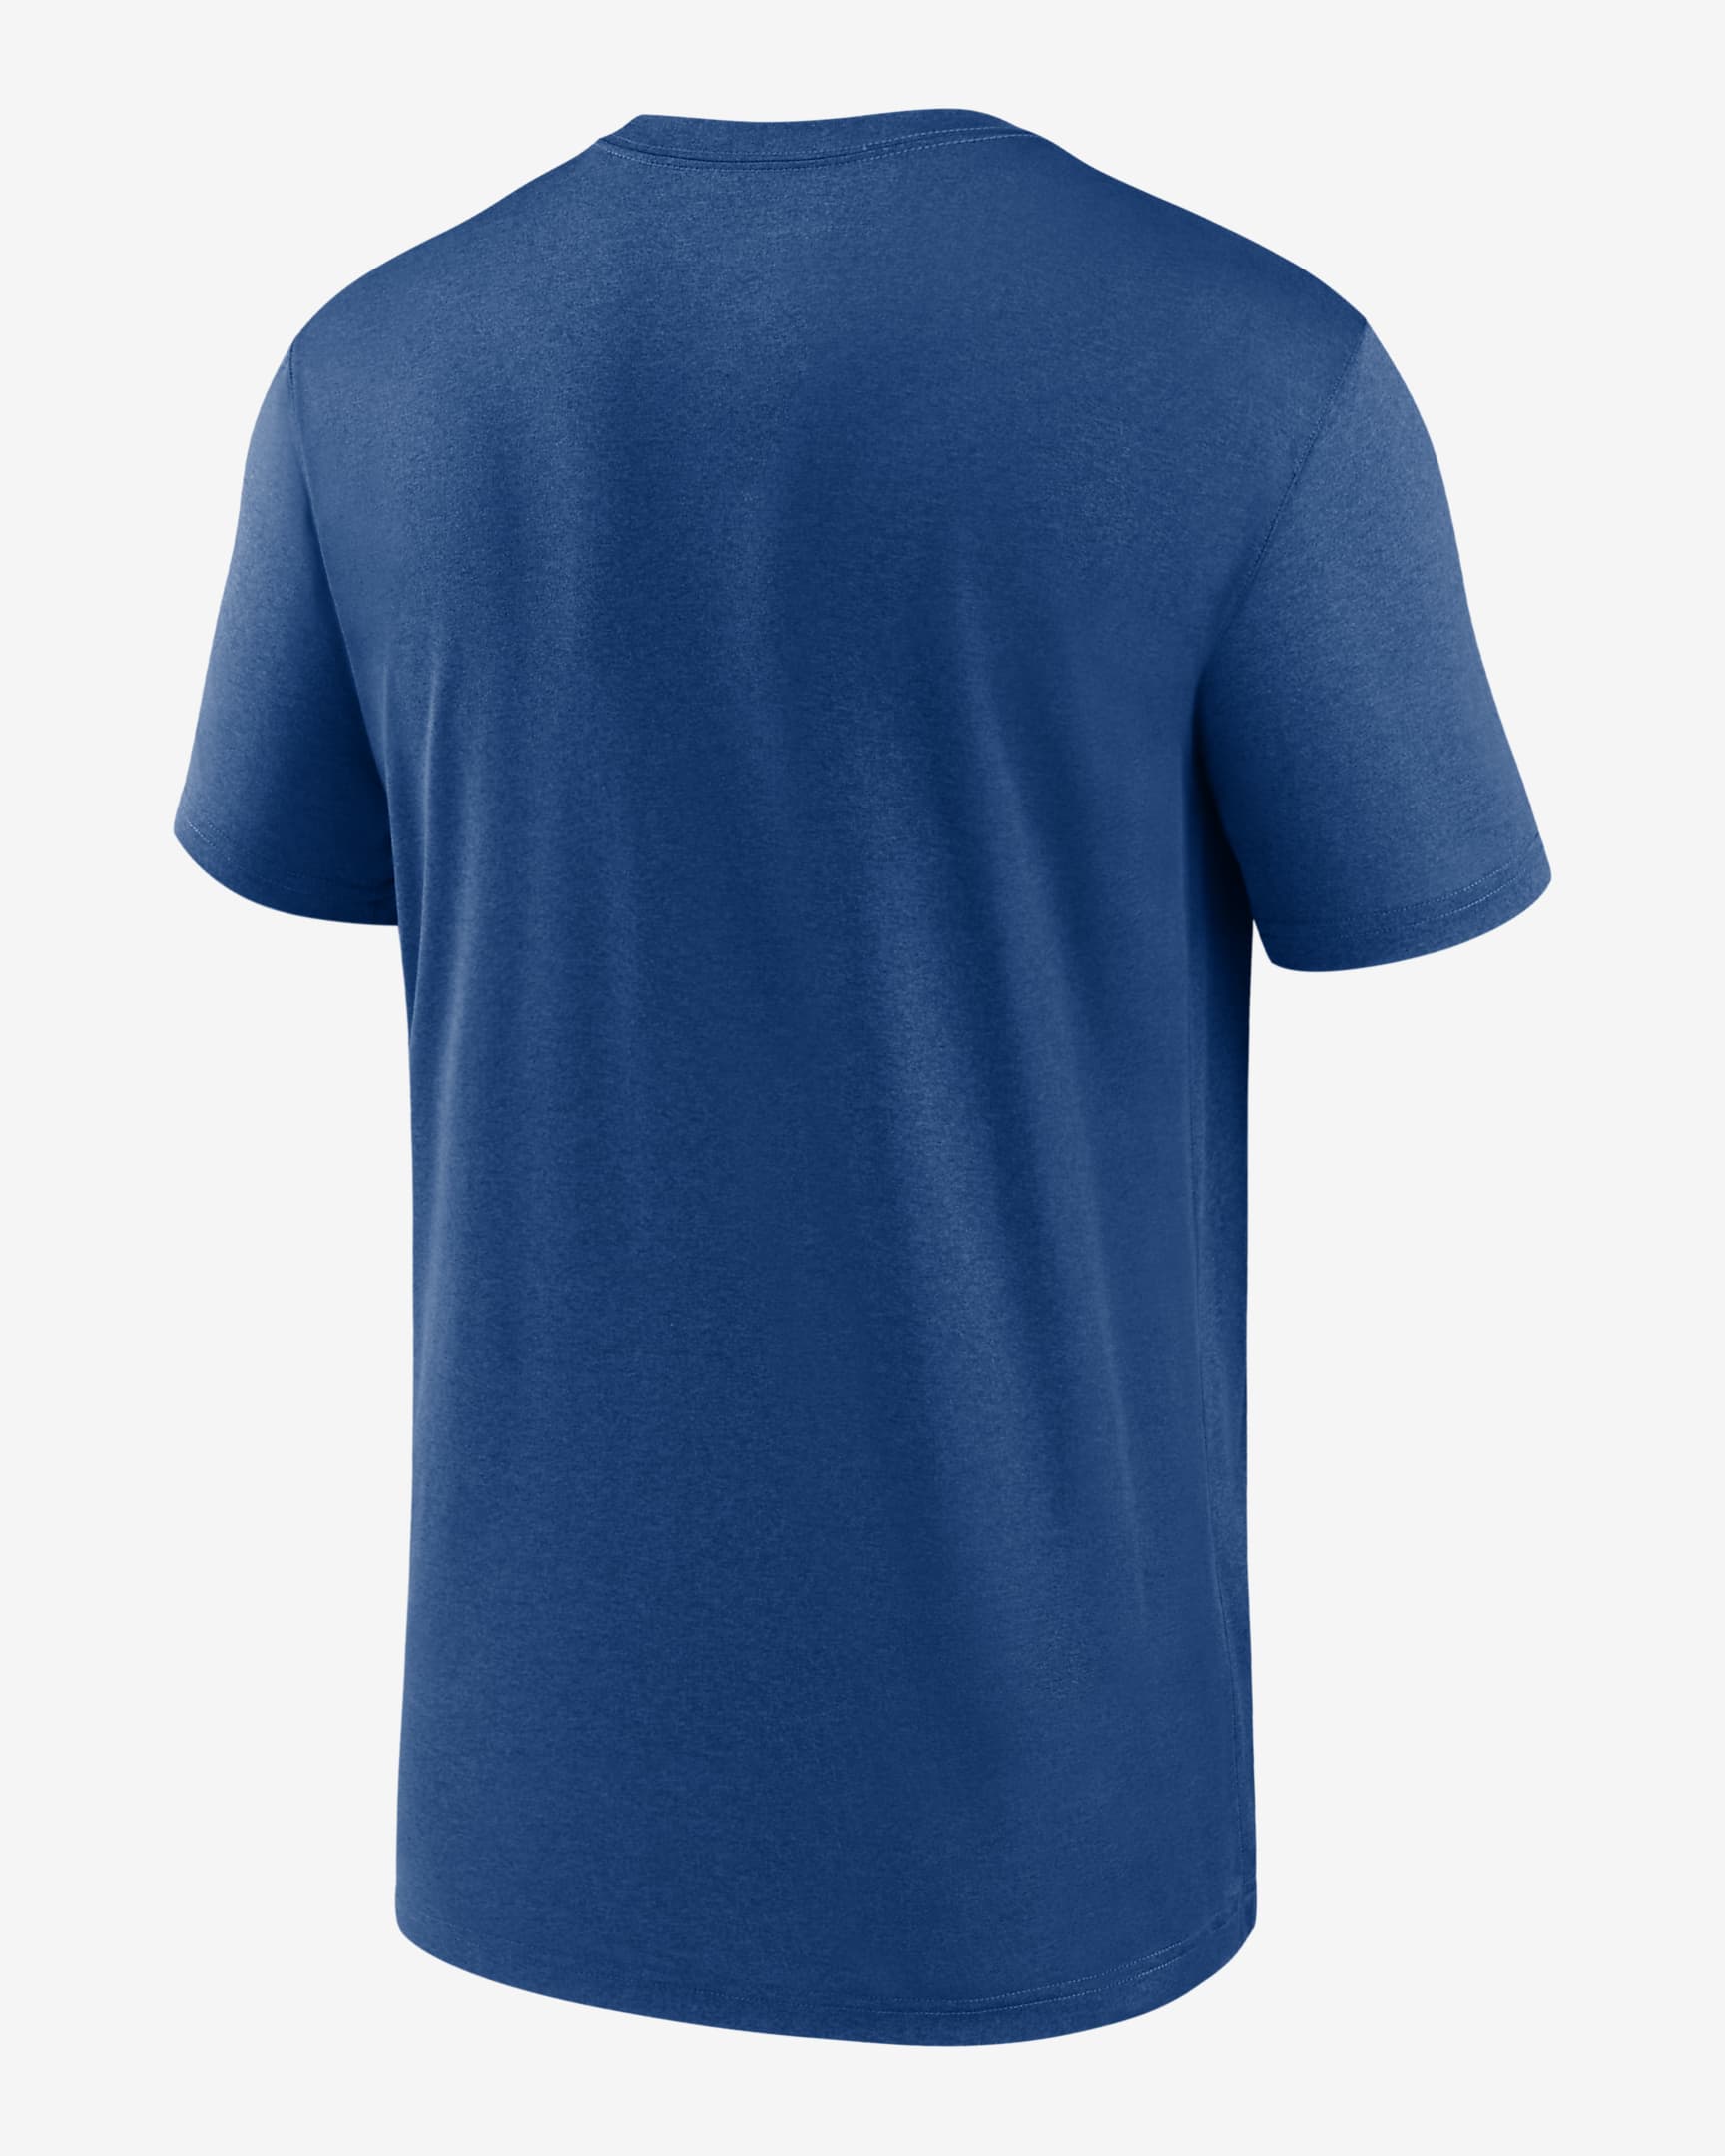 Nike Dri-FIT Icon Legend (NFL Indianapolis Colts) Men's T-Shirt. Nike.com